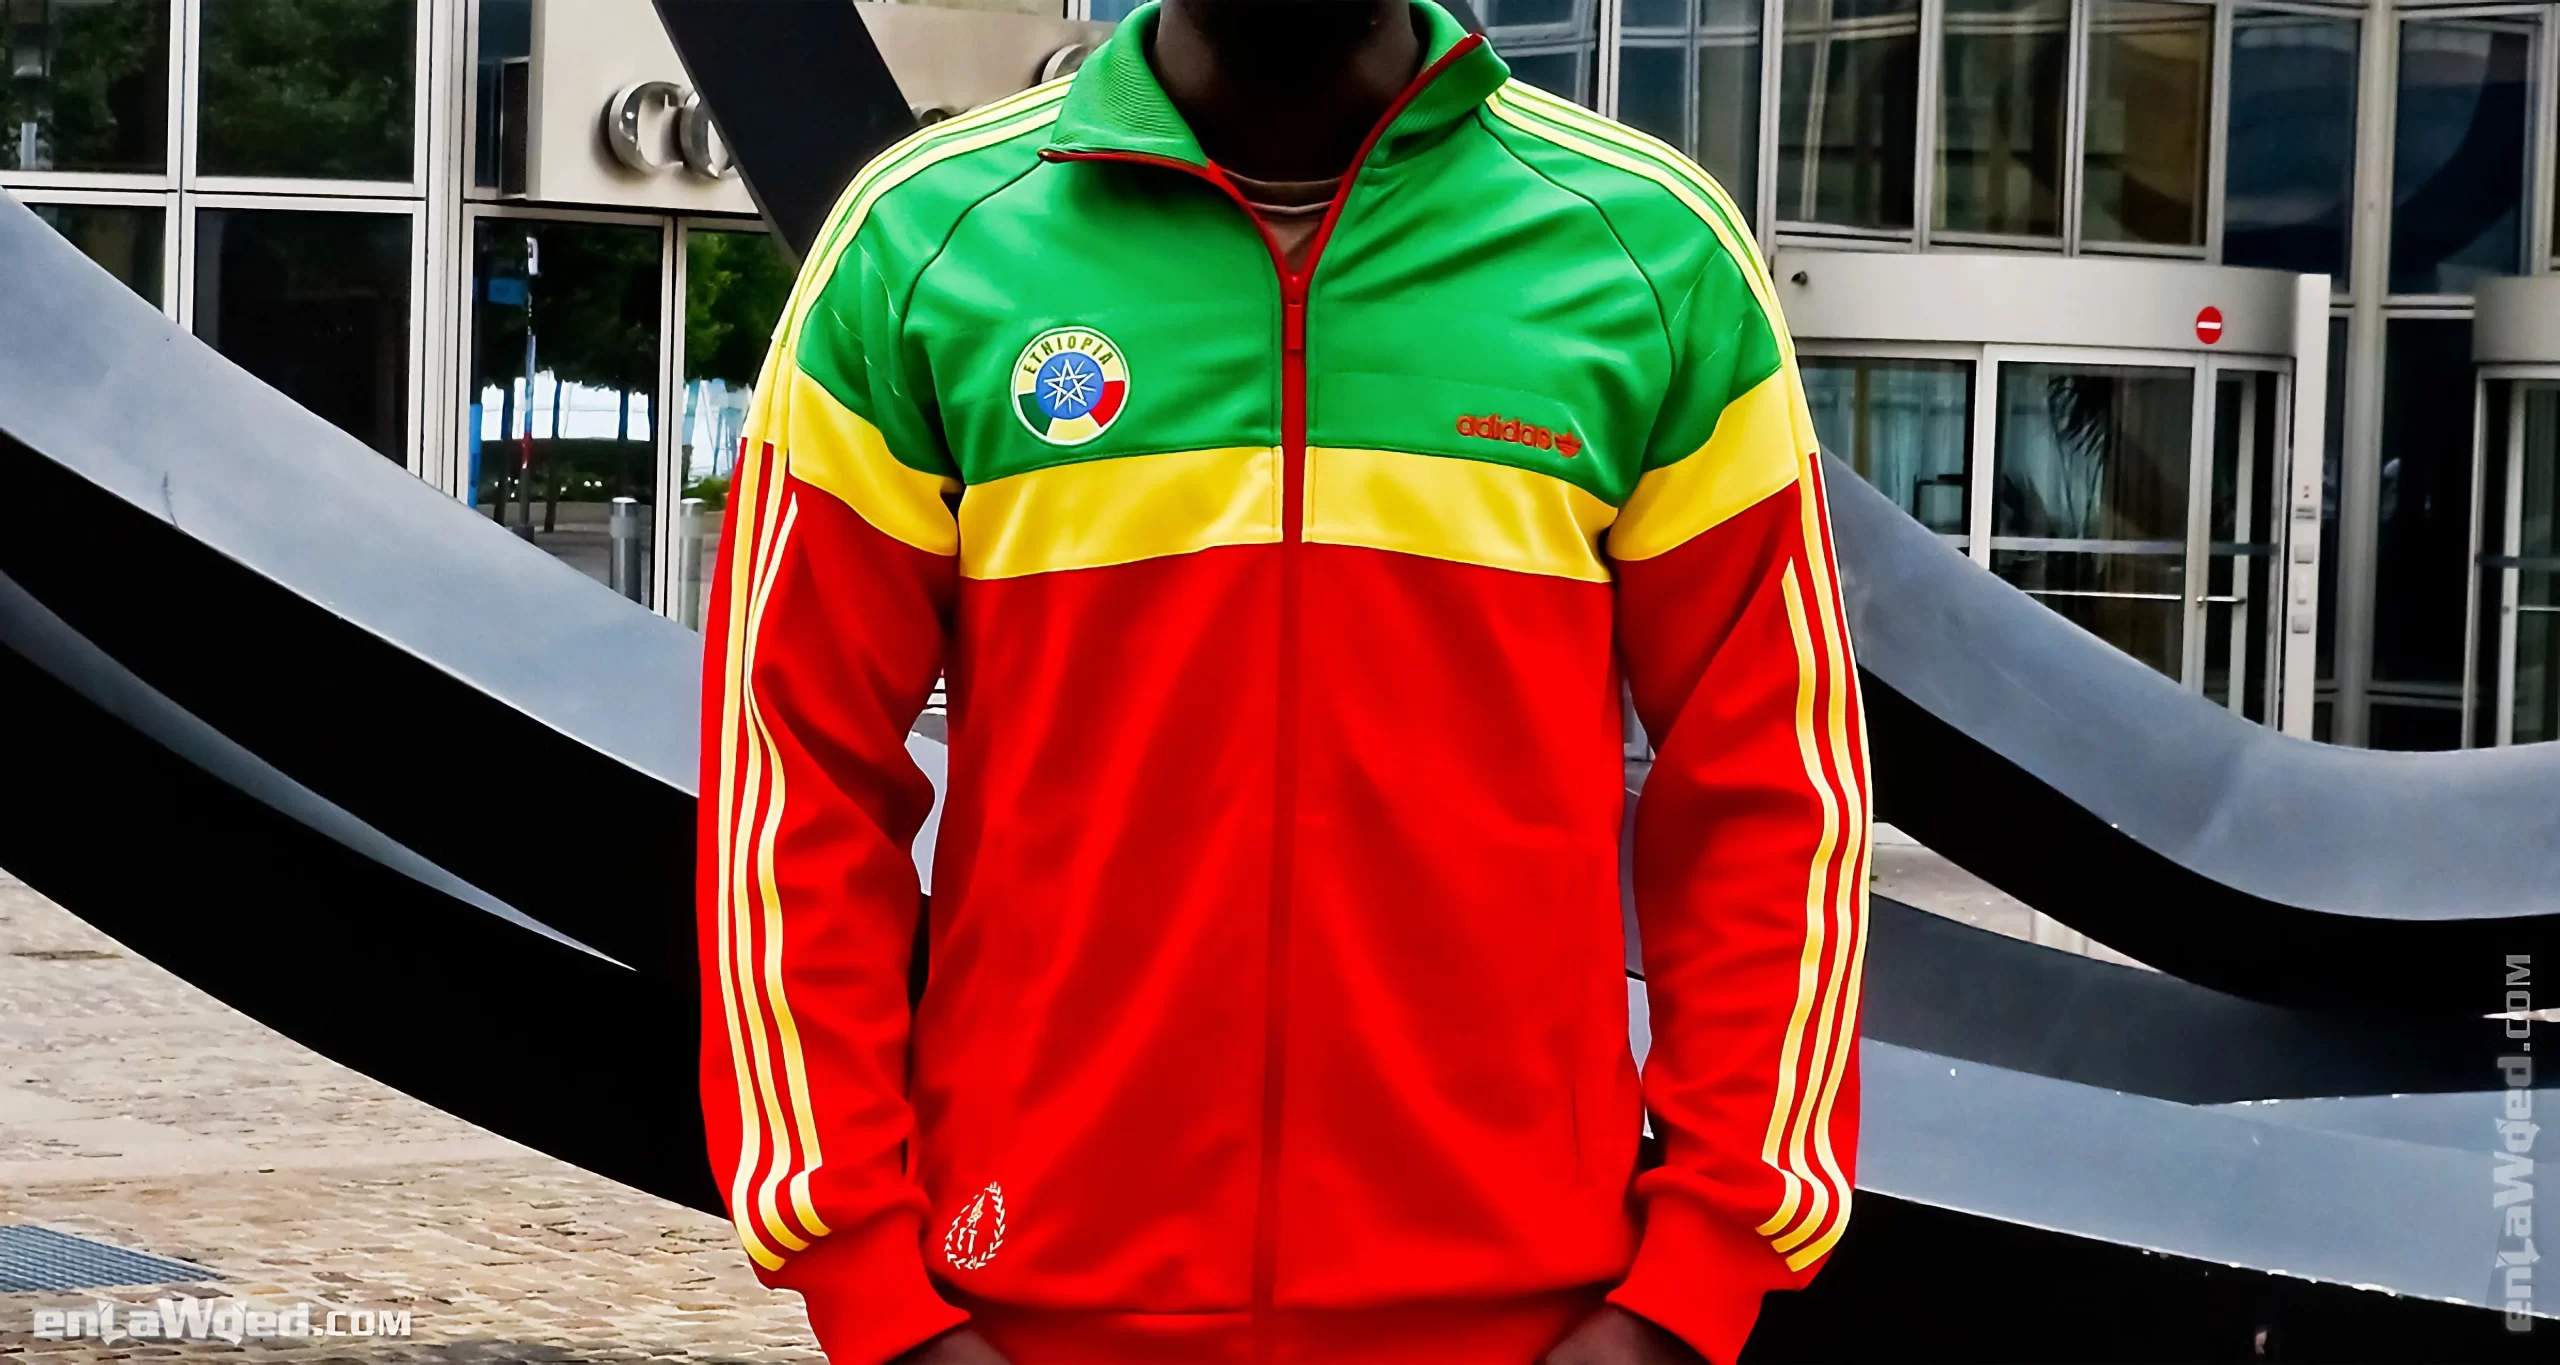 Men's 2008 Ethiopia Track Top by Adidas Originals: Masterclass (EnLawded.com file #lmchk89704ip2y121461kg9st)